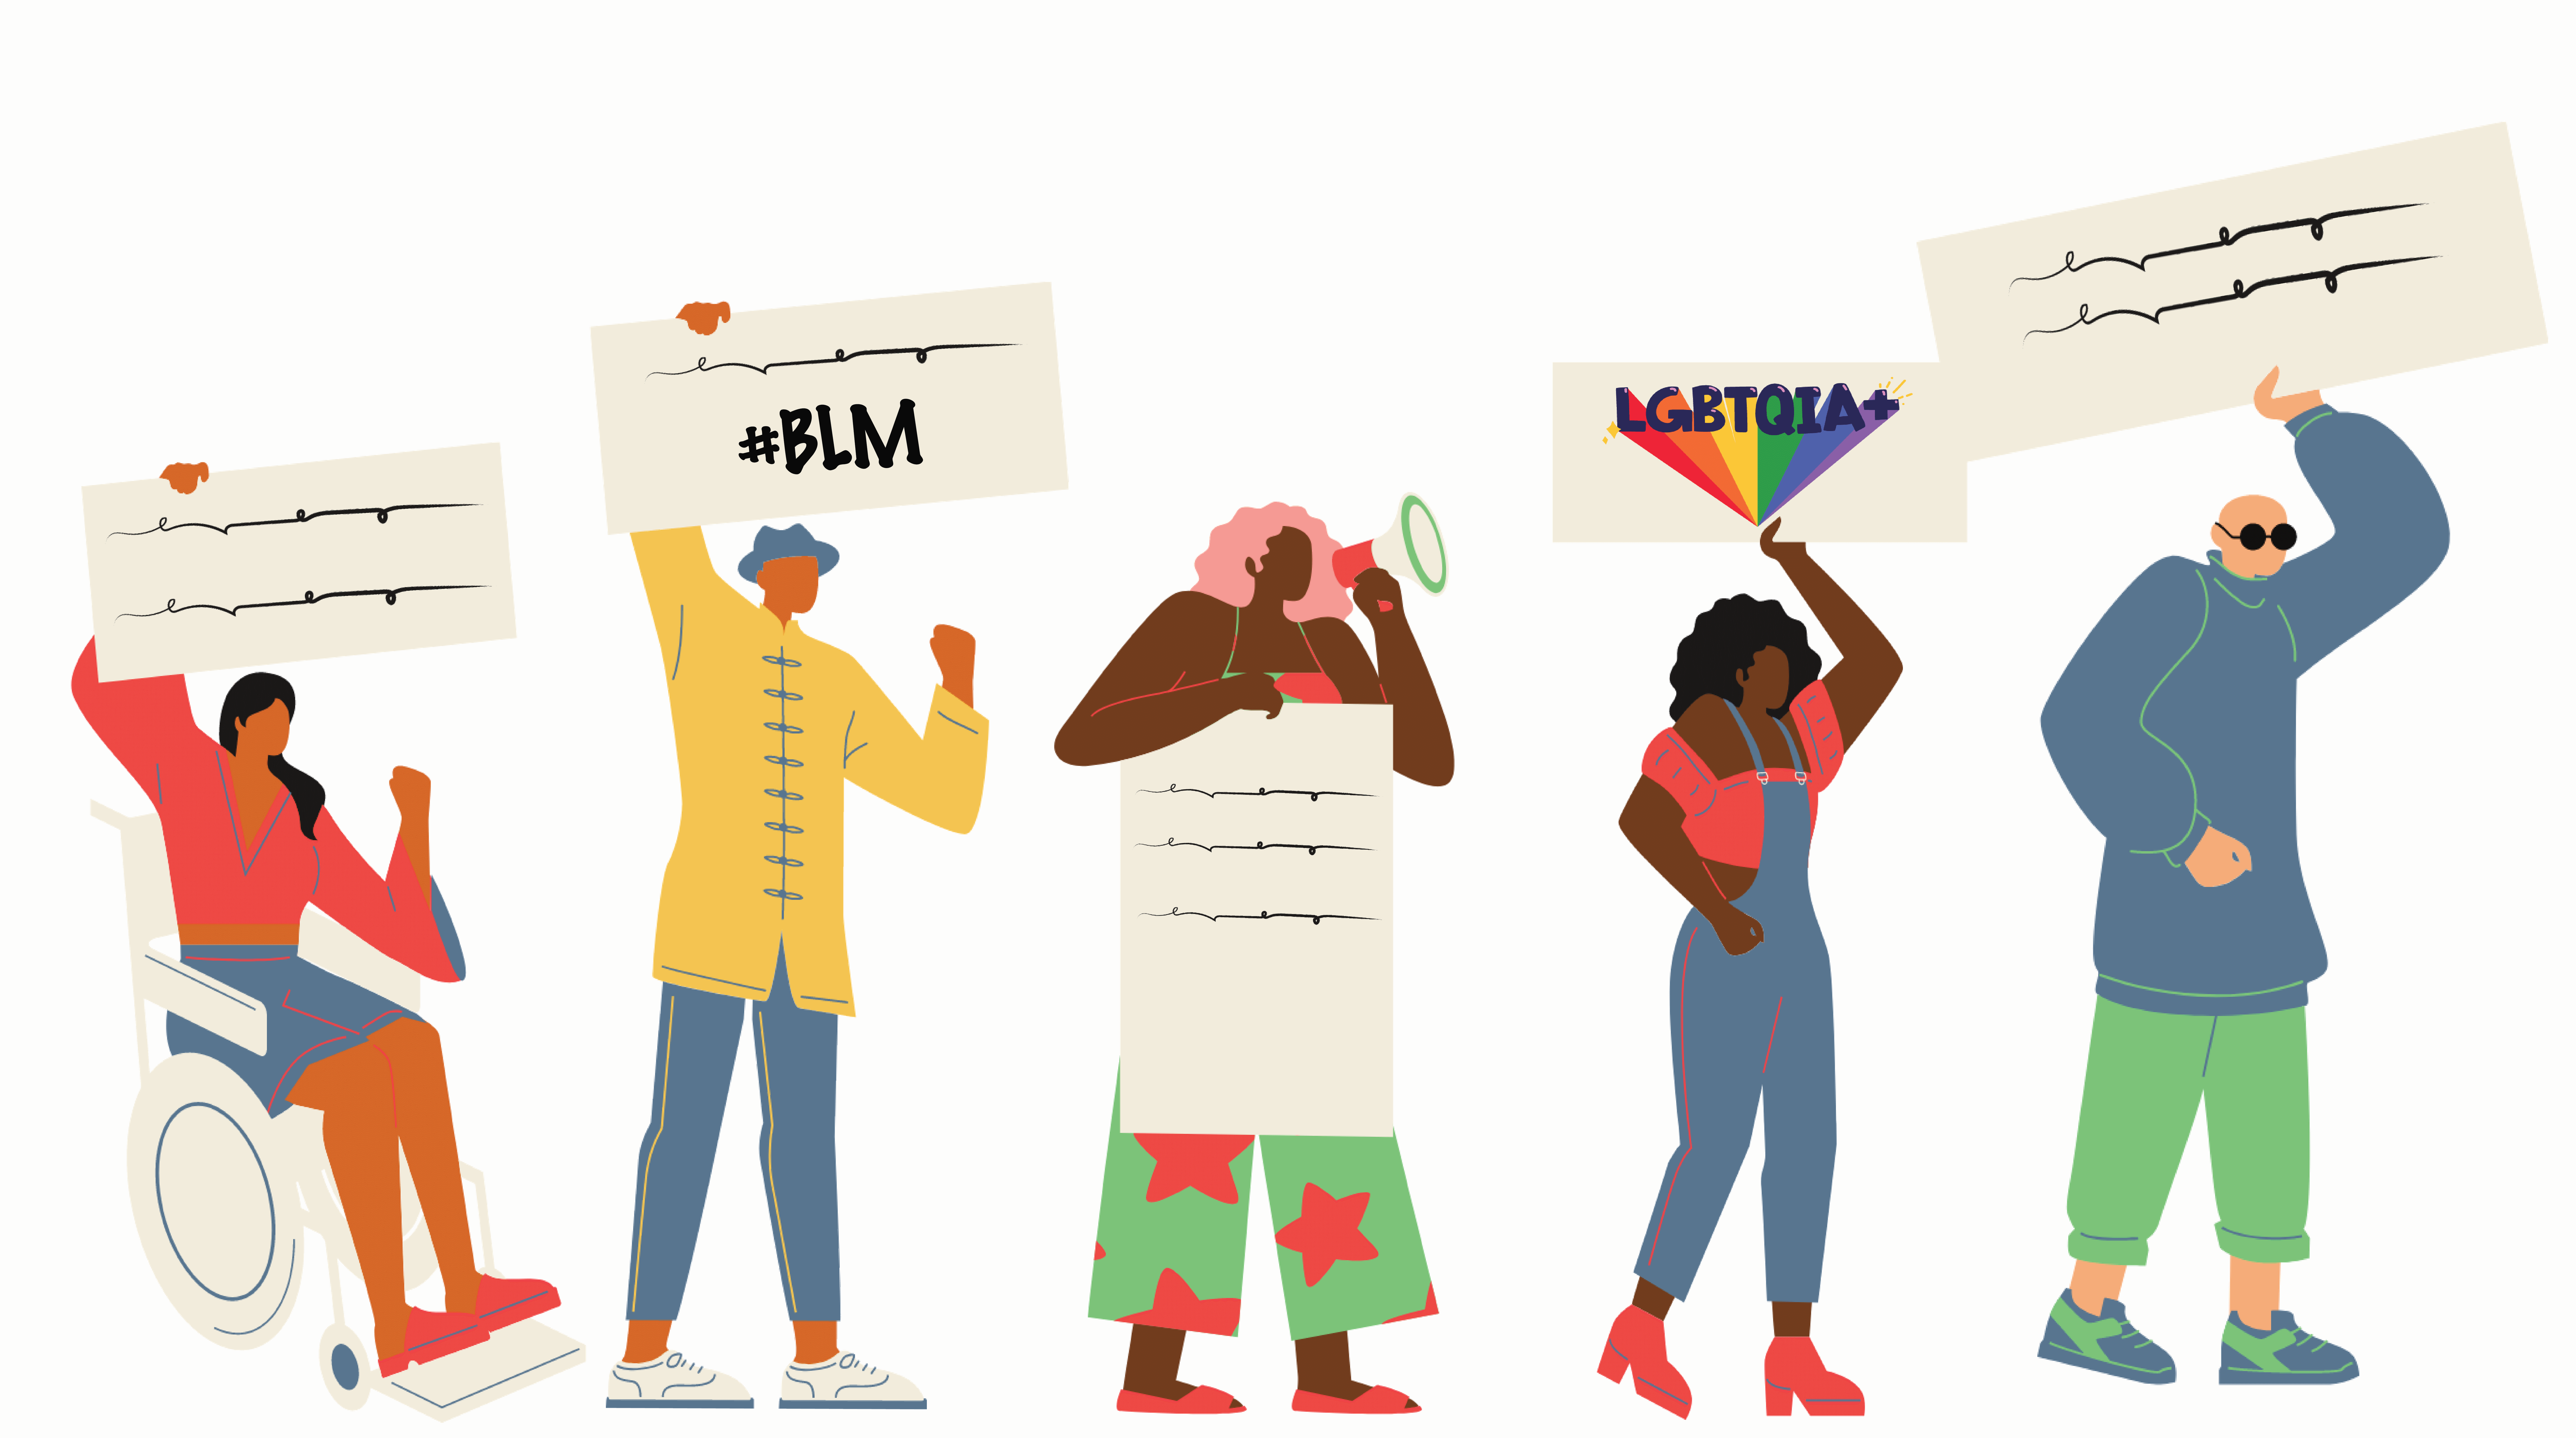 An illustration of latinx protestors supporting Black Lives Matter, LGBTQIA+, and various movements